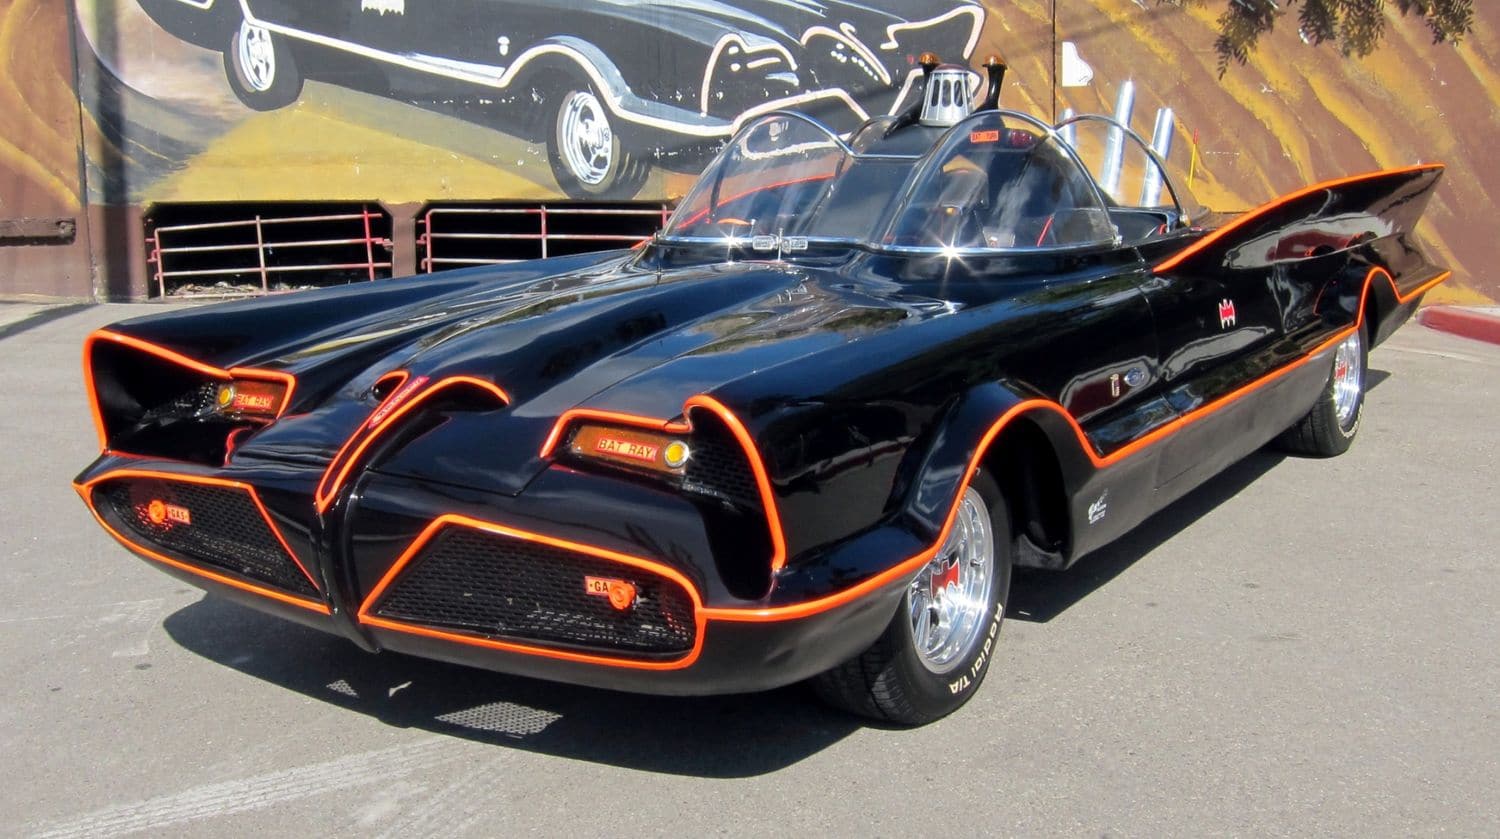  car of dc comics superhero batman one of the tv cars that evolved